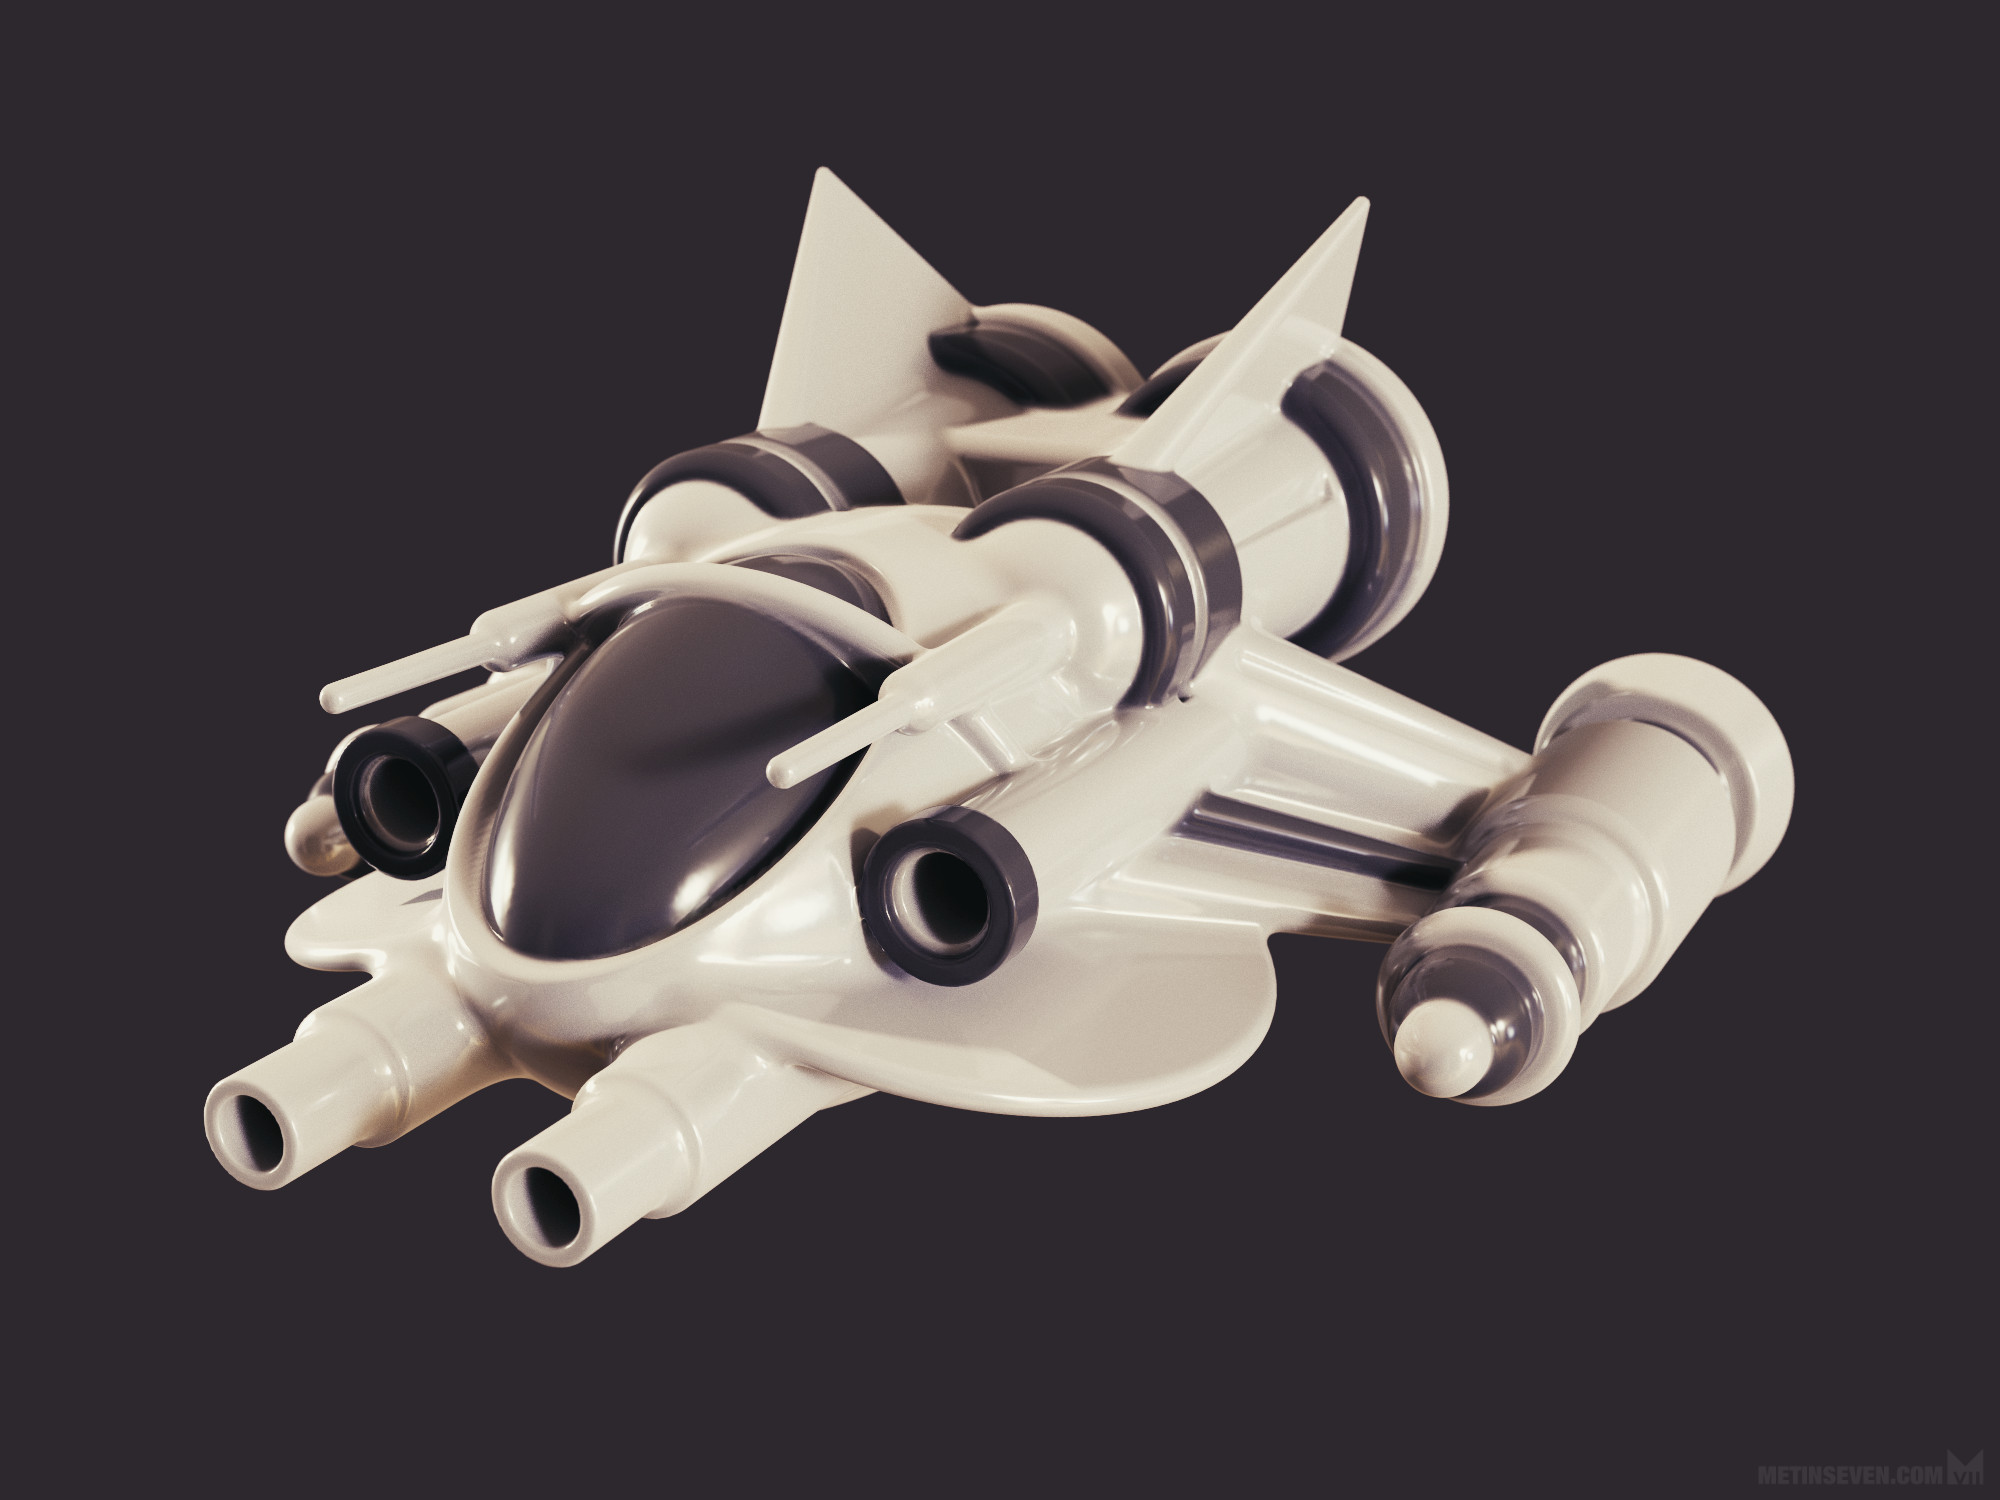 Spacecraft toy concept